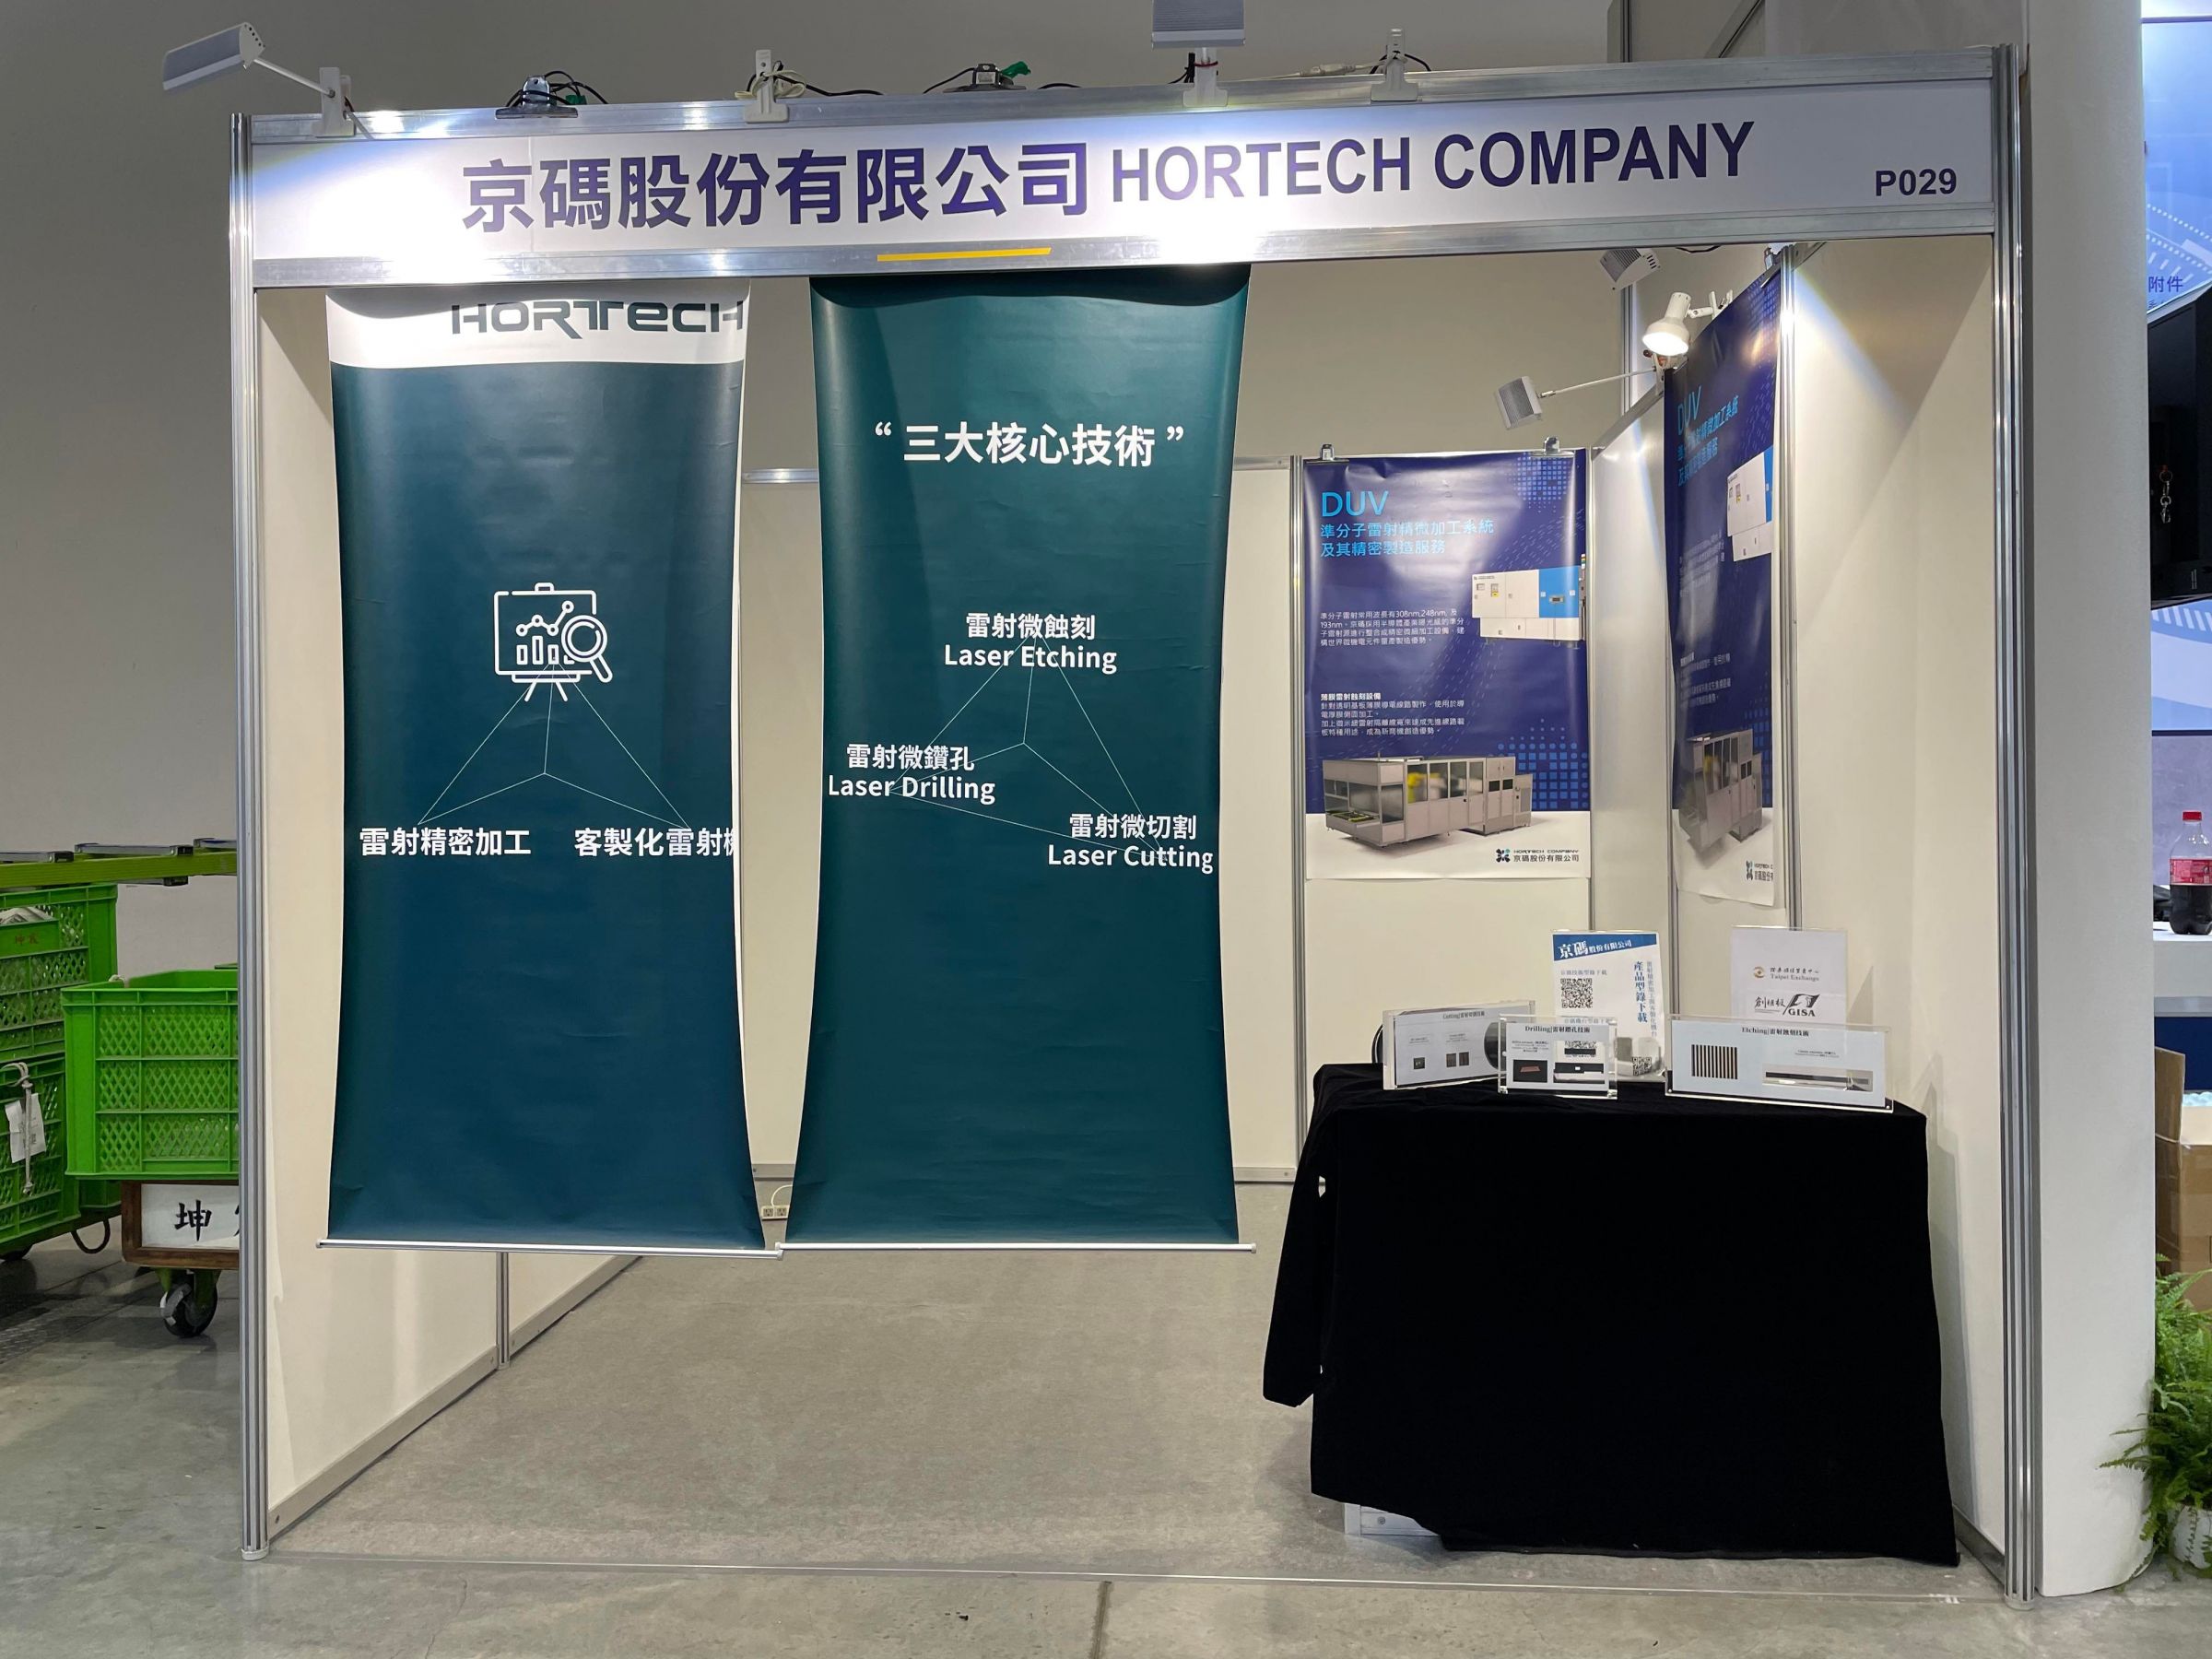 Gian hàng của Hortech Company tại Hội chợ Laser & Photonics Taiwan 2022